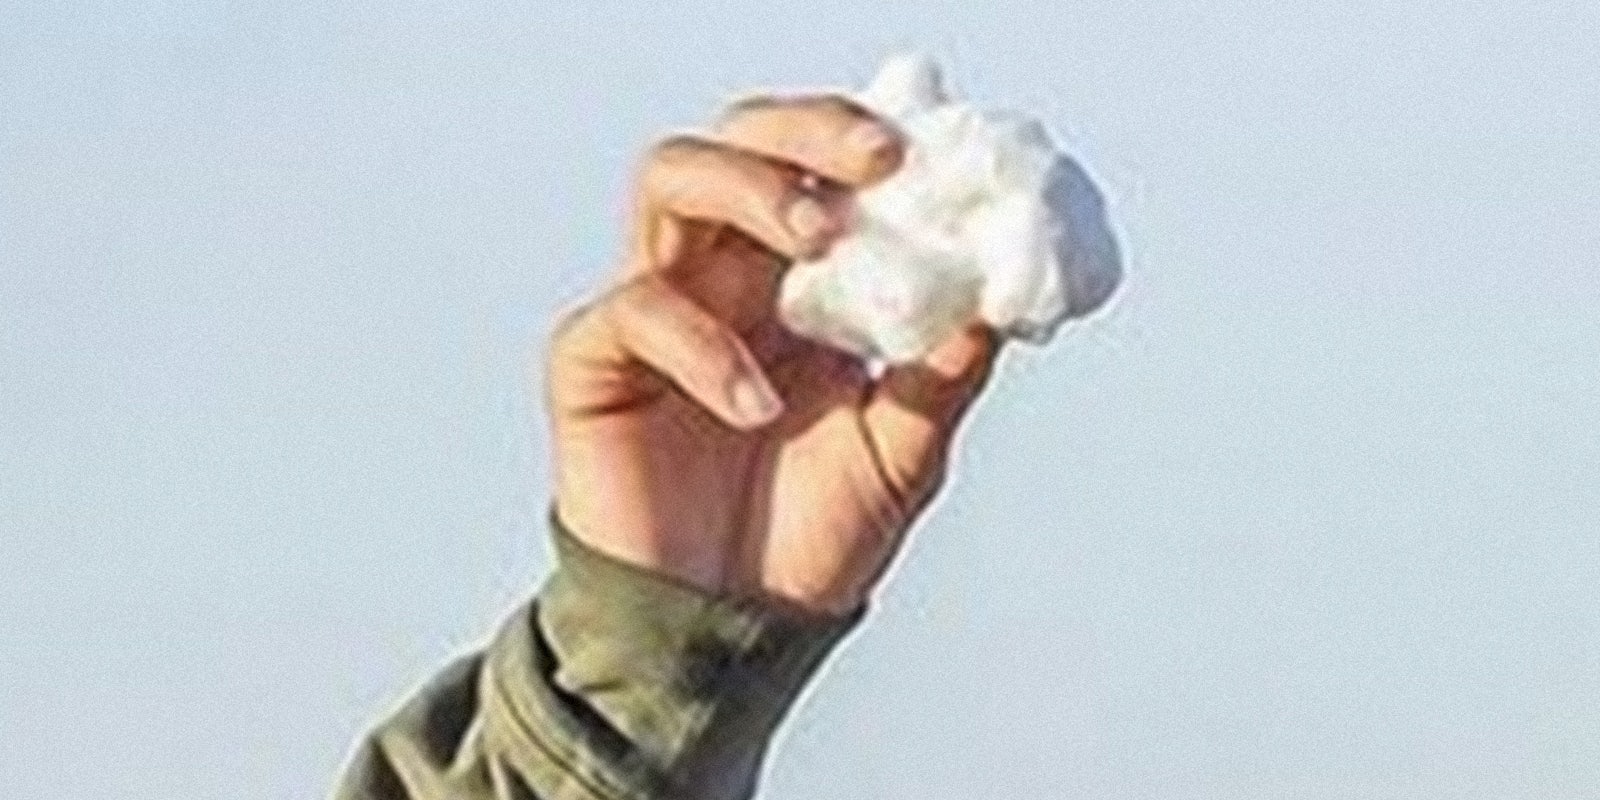 man holding bit of cotton